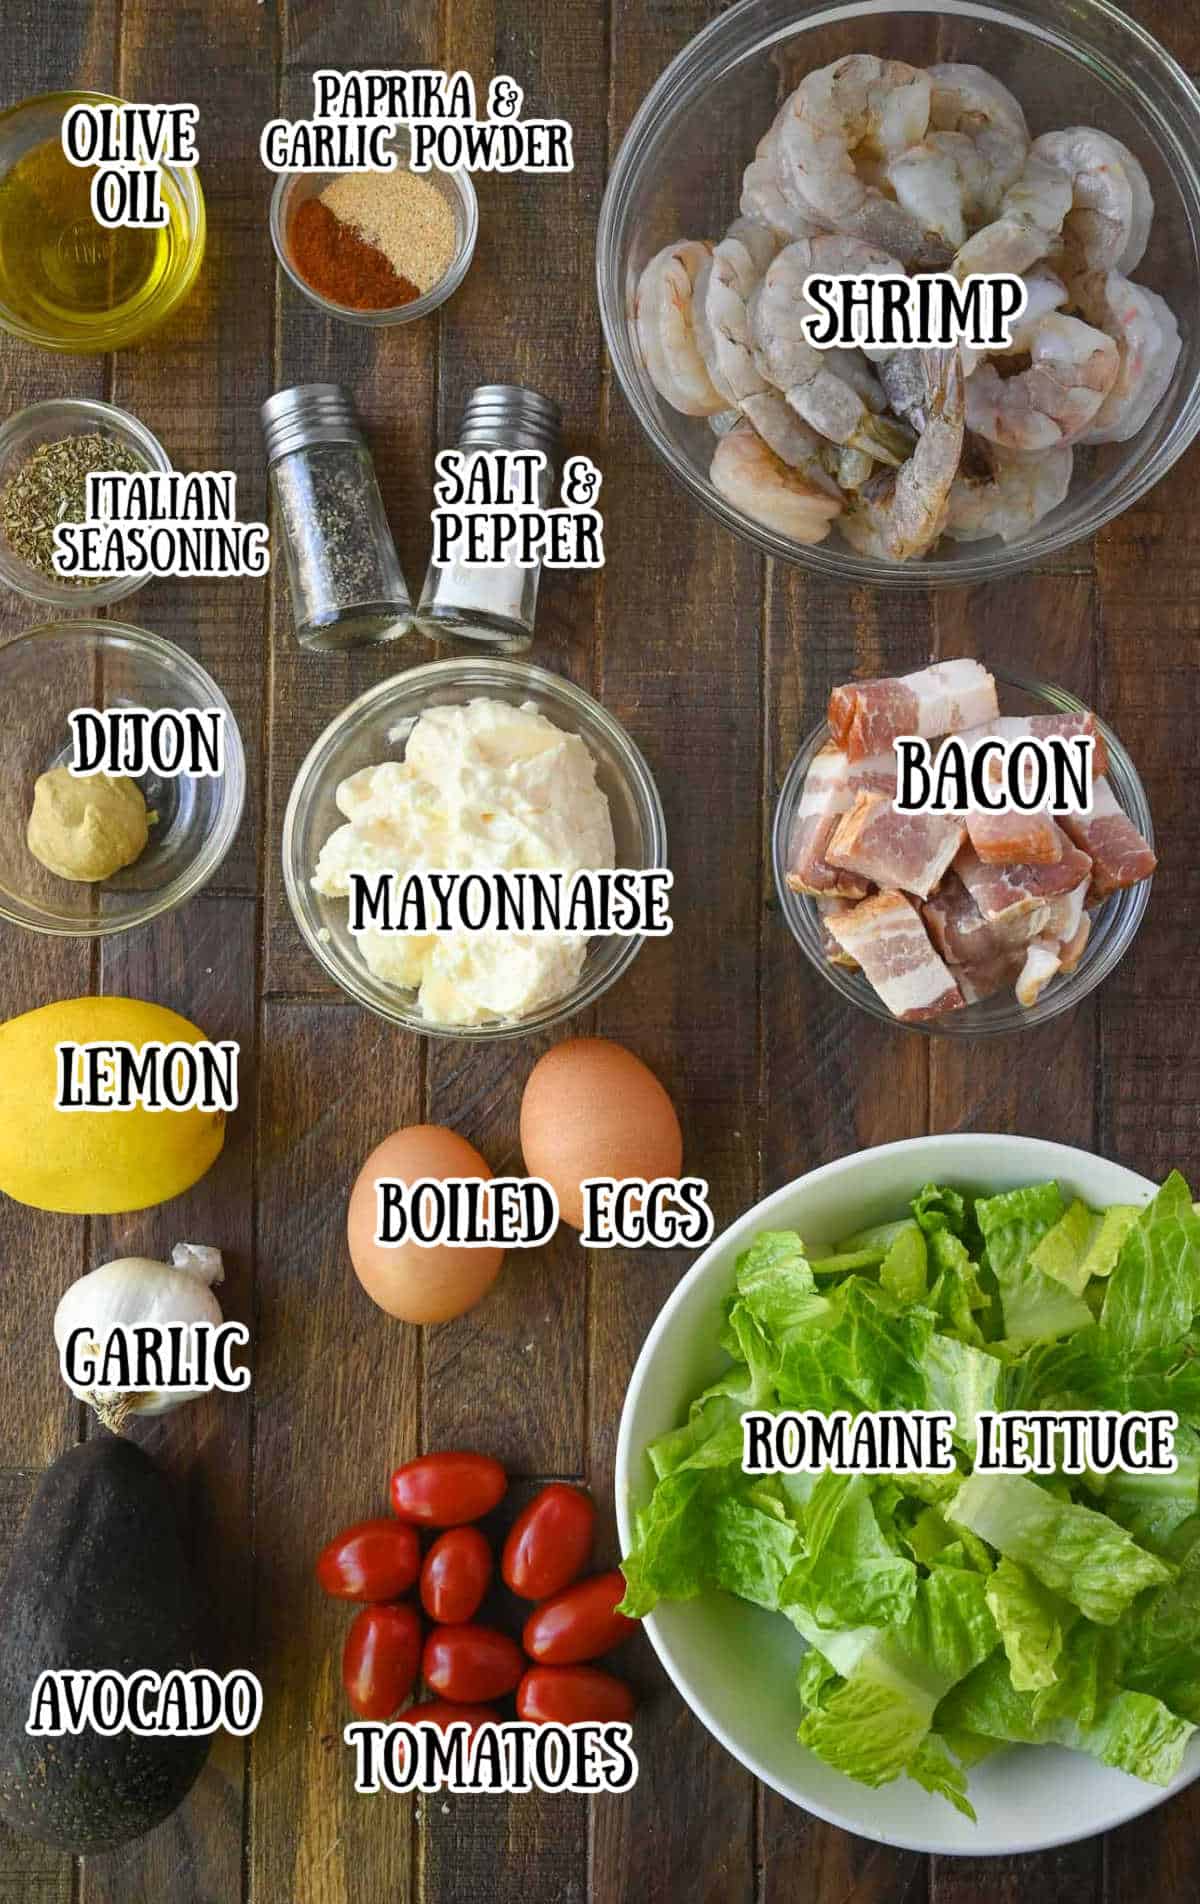 All the ingredinets needed for the shrimp cobb salad.